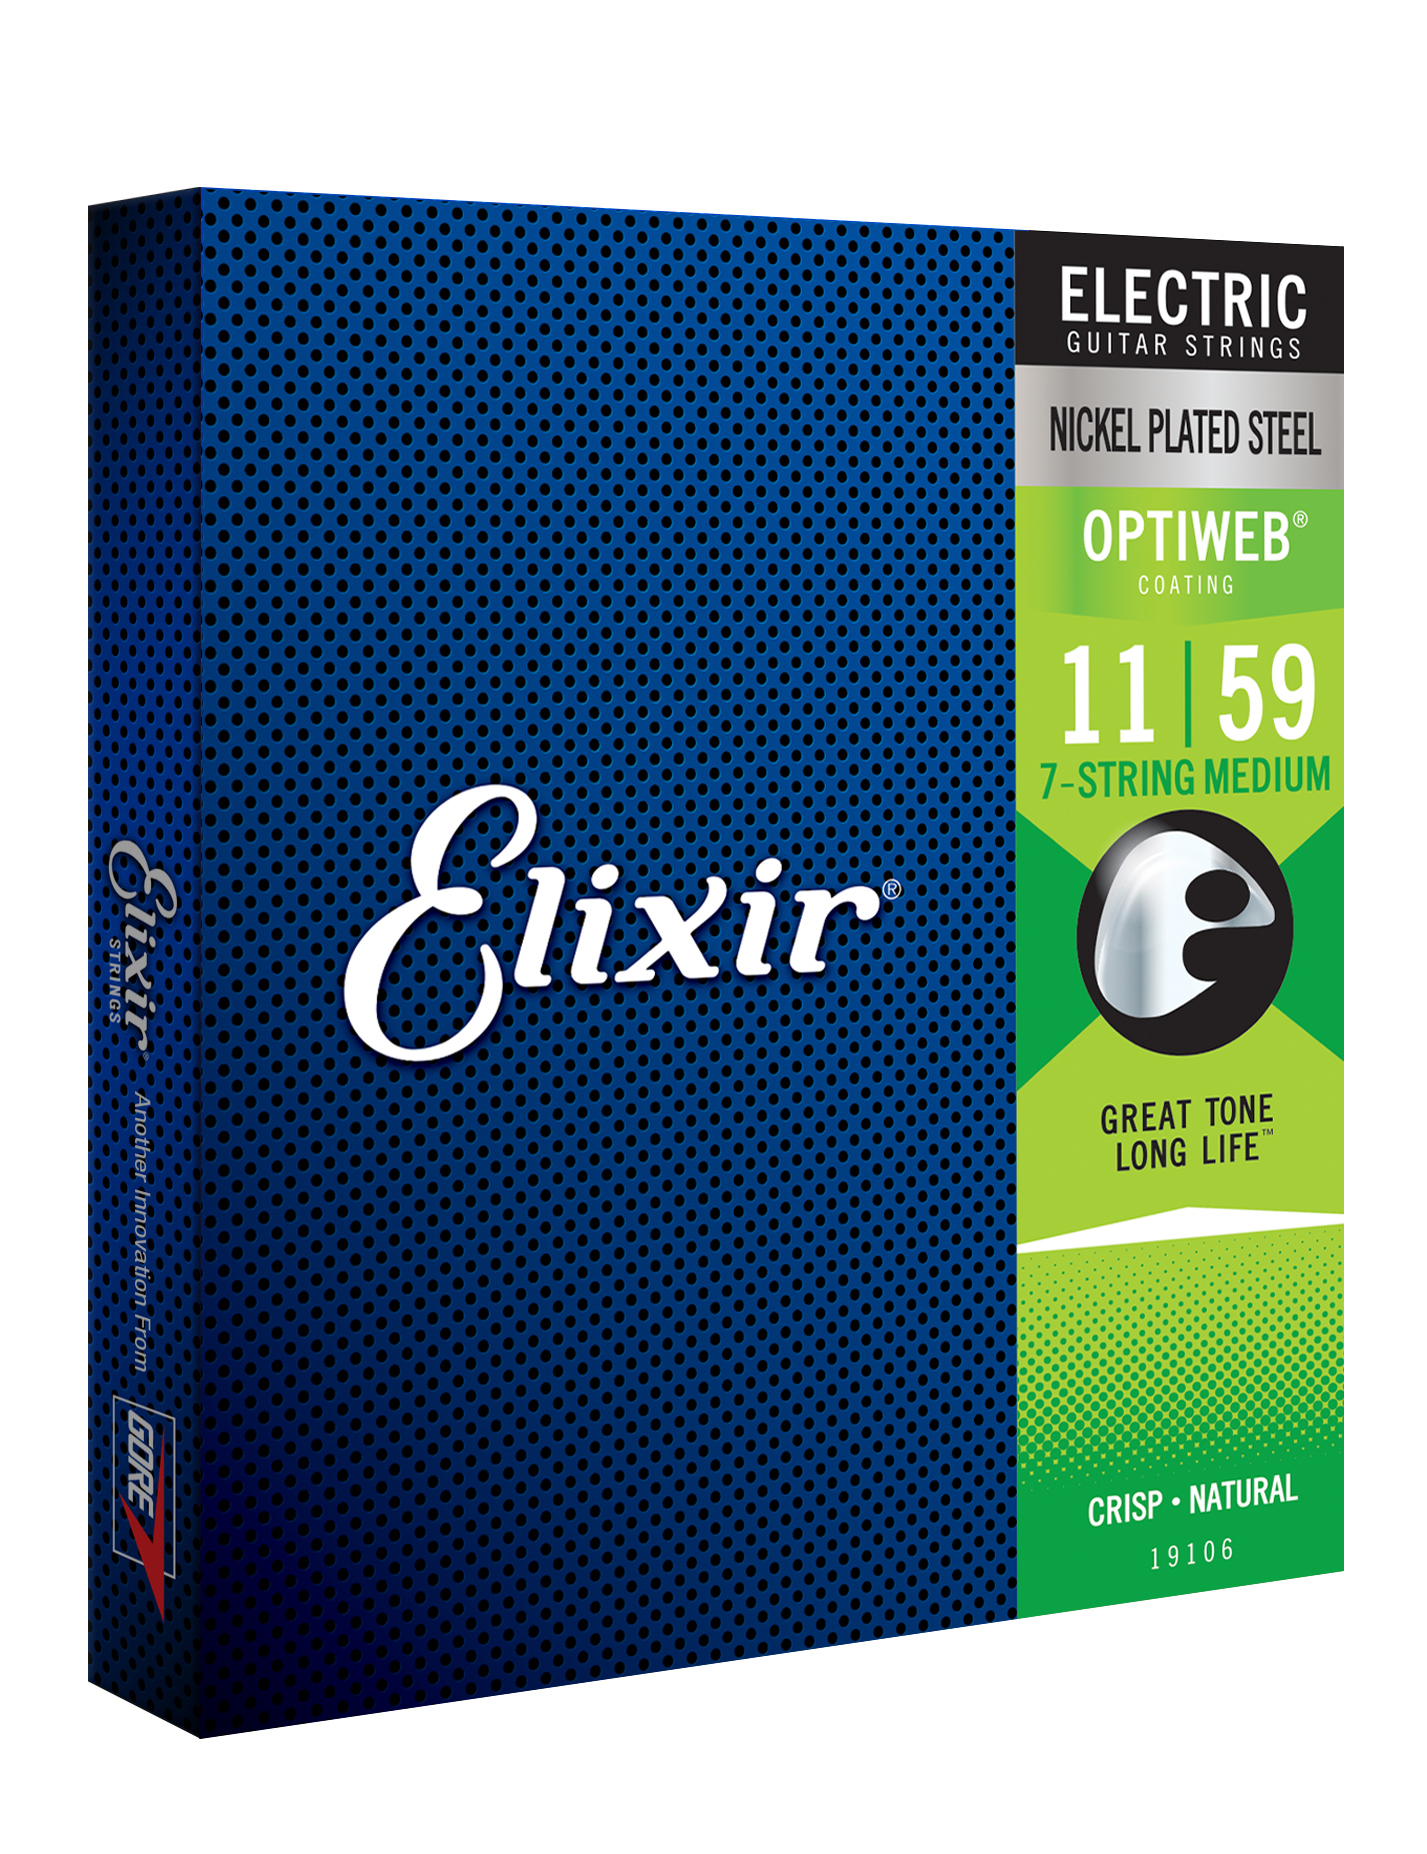 Elixir 19106 Optiweb Nps Round Wound Electric Guitar 7c 11-59 - Electric guitar strings - Variation 1